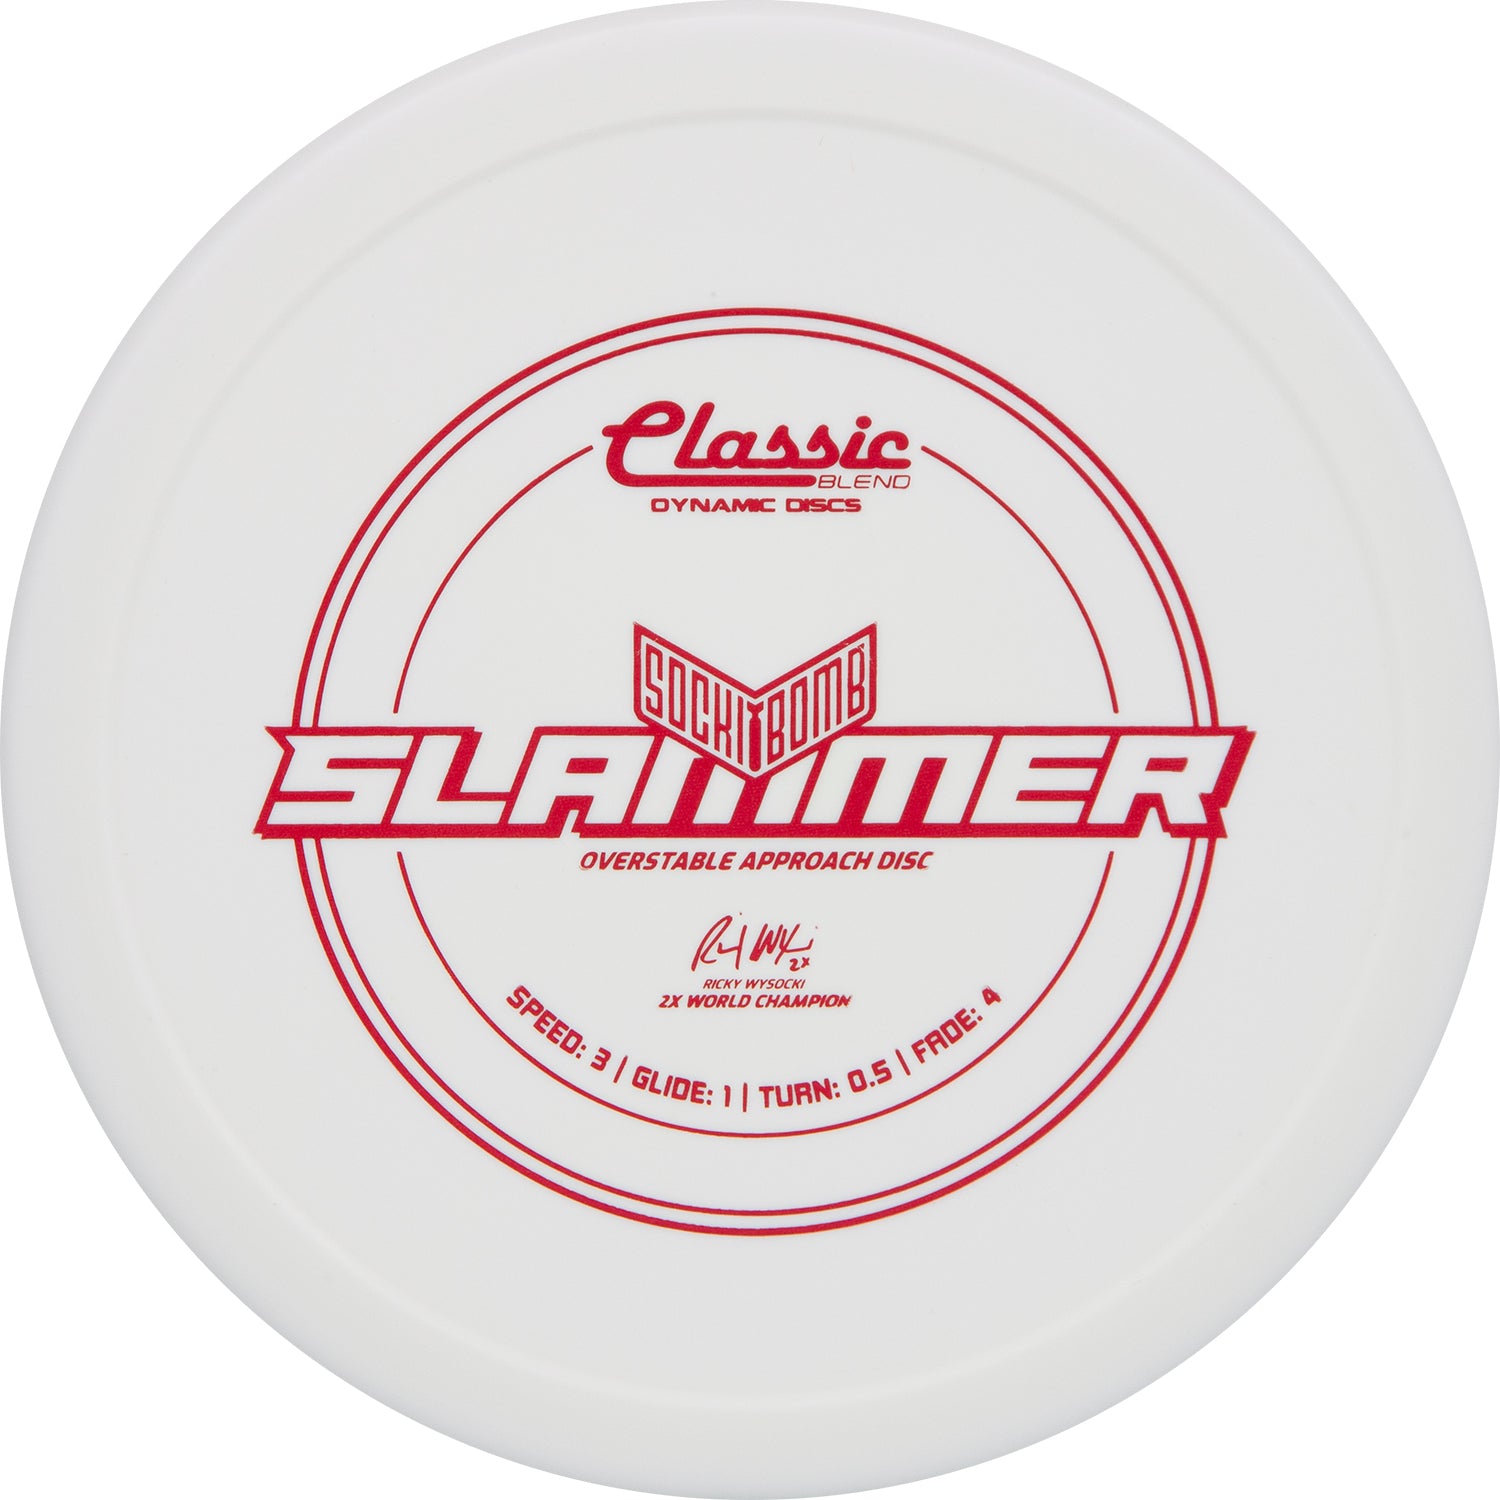 Dynamic Discs Classic Supreme Orbit Sockibomb Slammer - Ignite